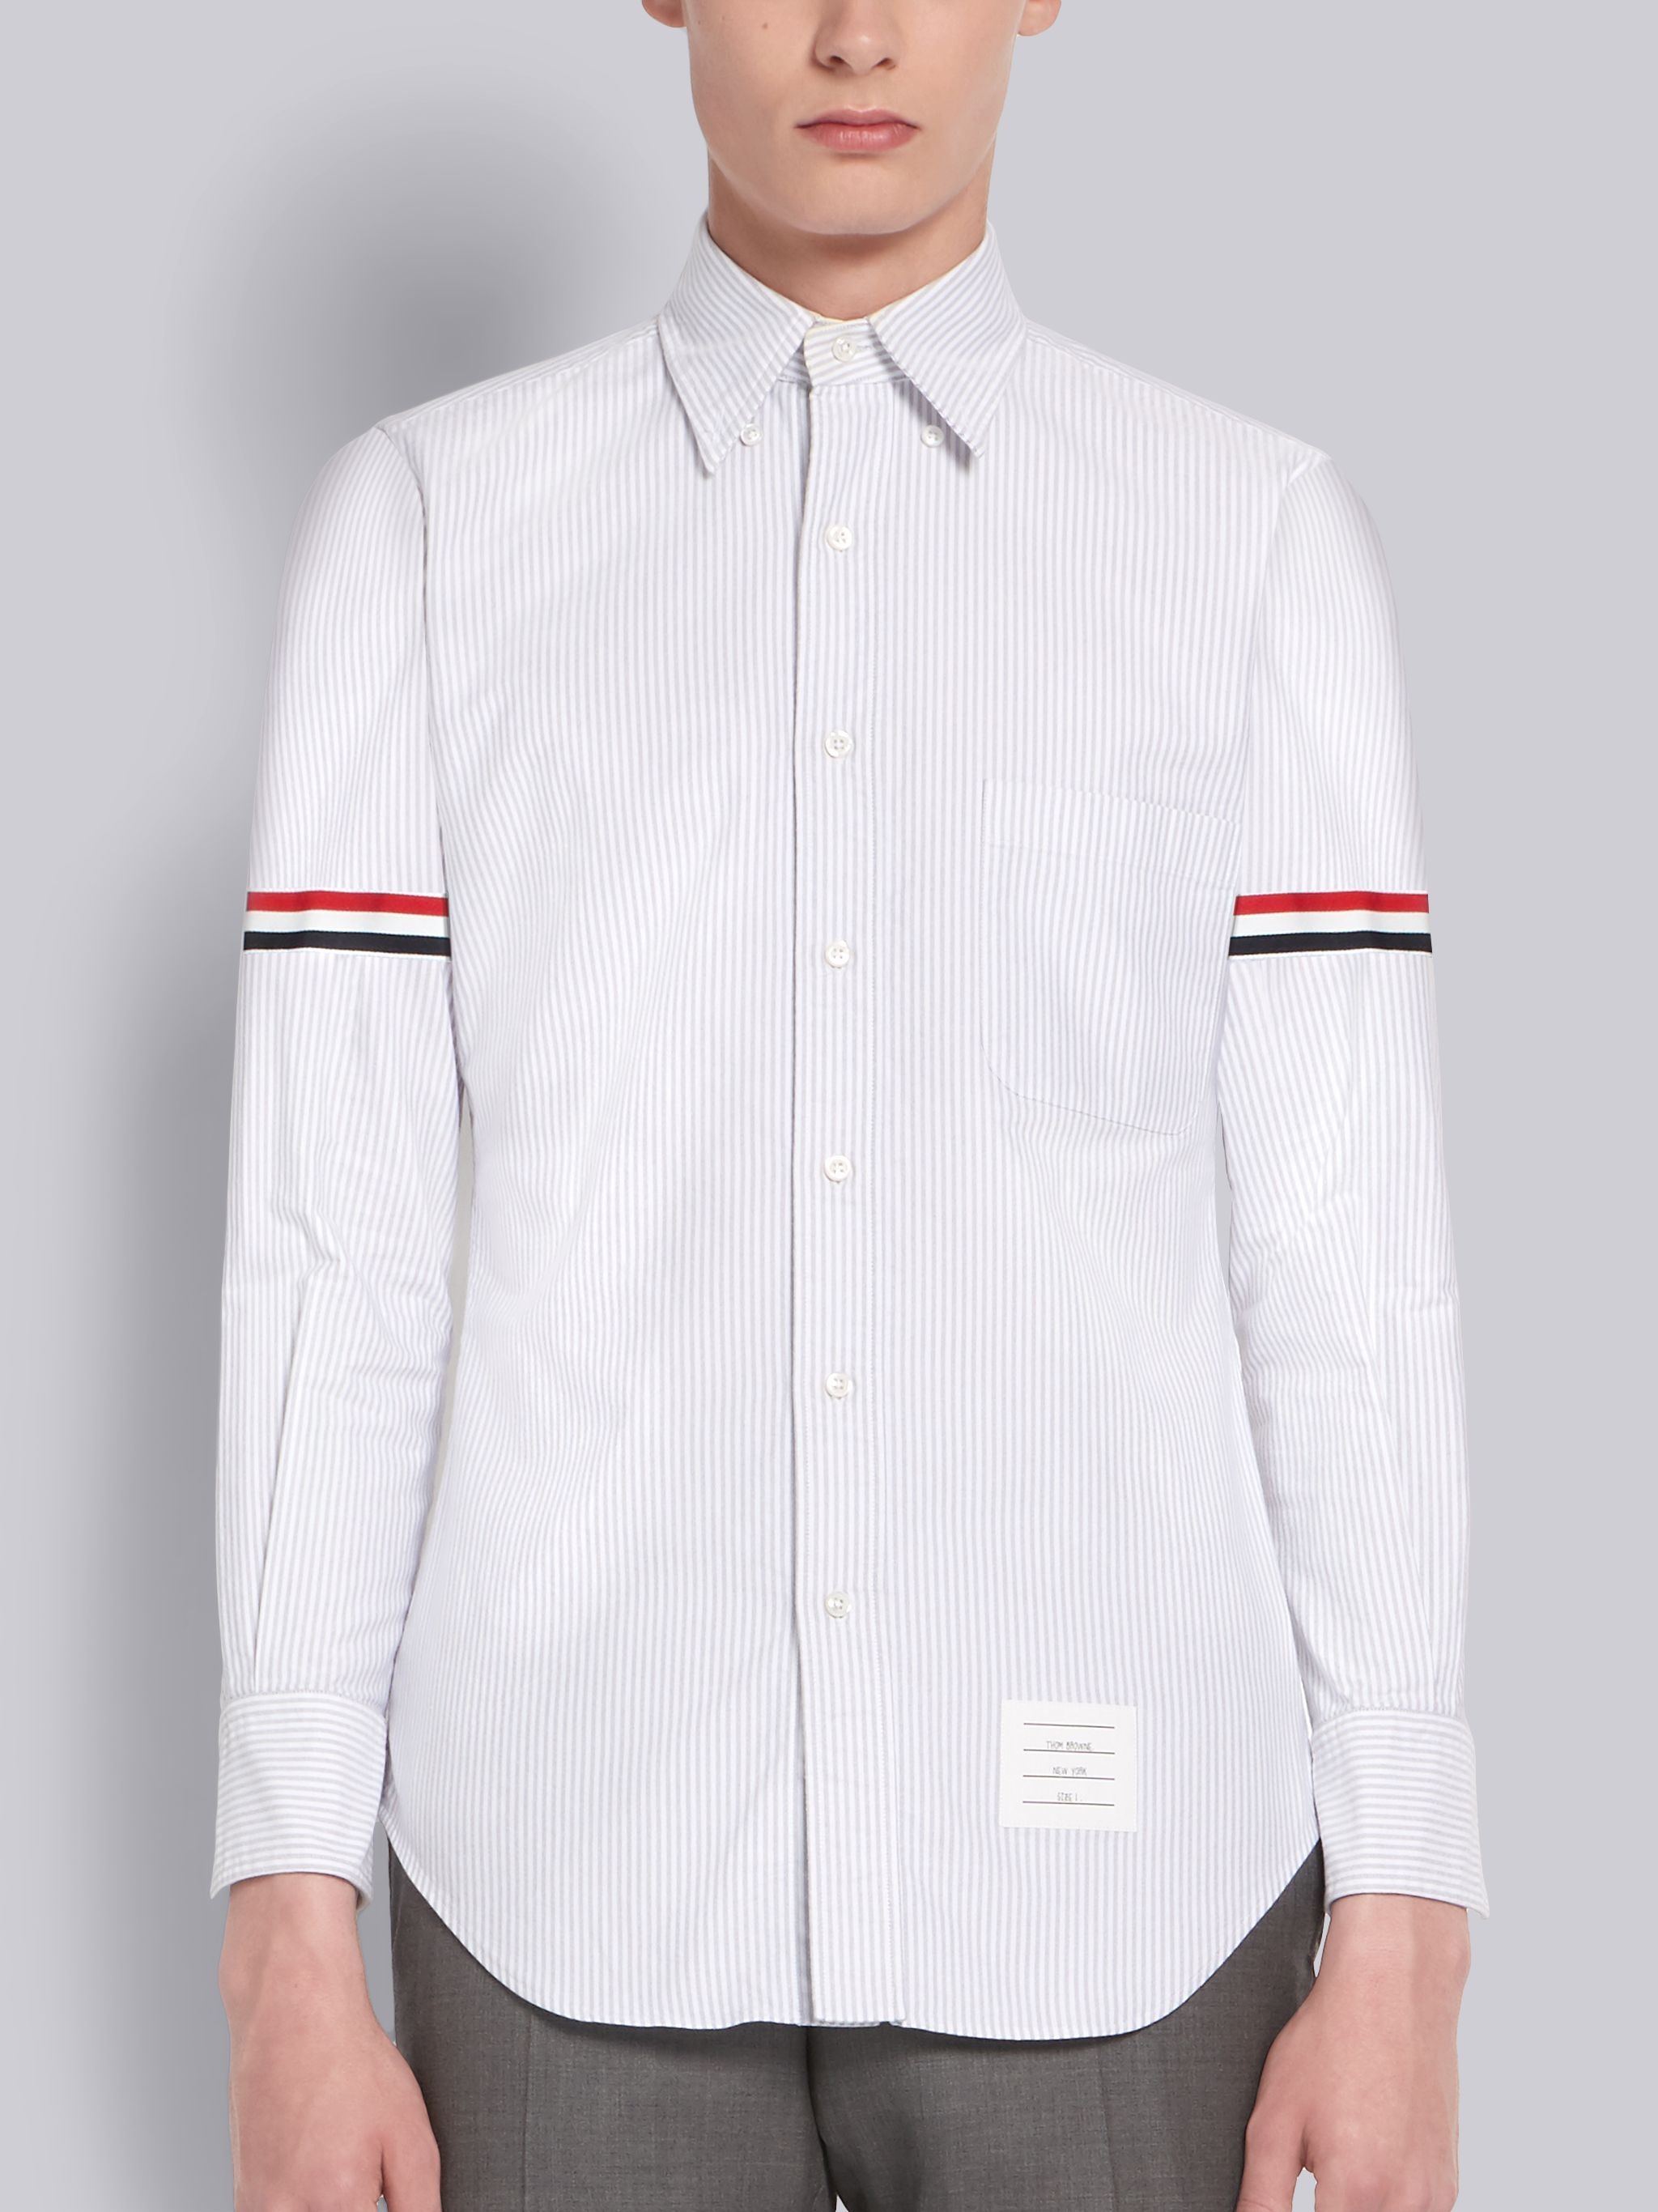 Medium Grey Oxford Cotton University Stripe Grosgrain Armband Shirt - 3